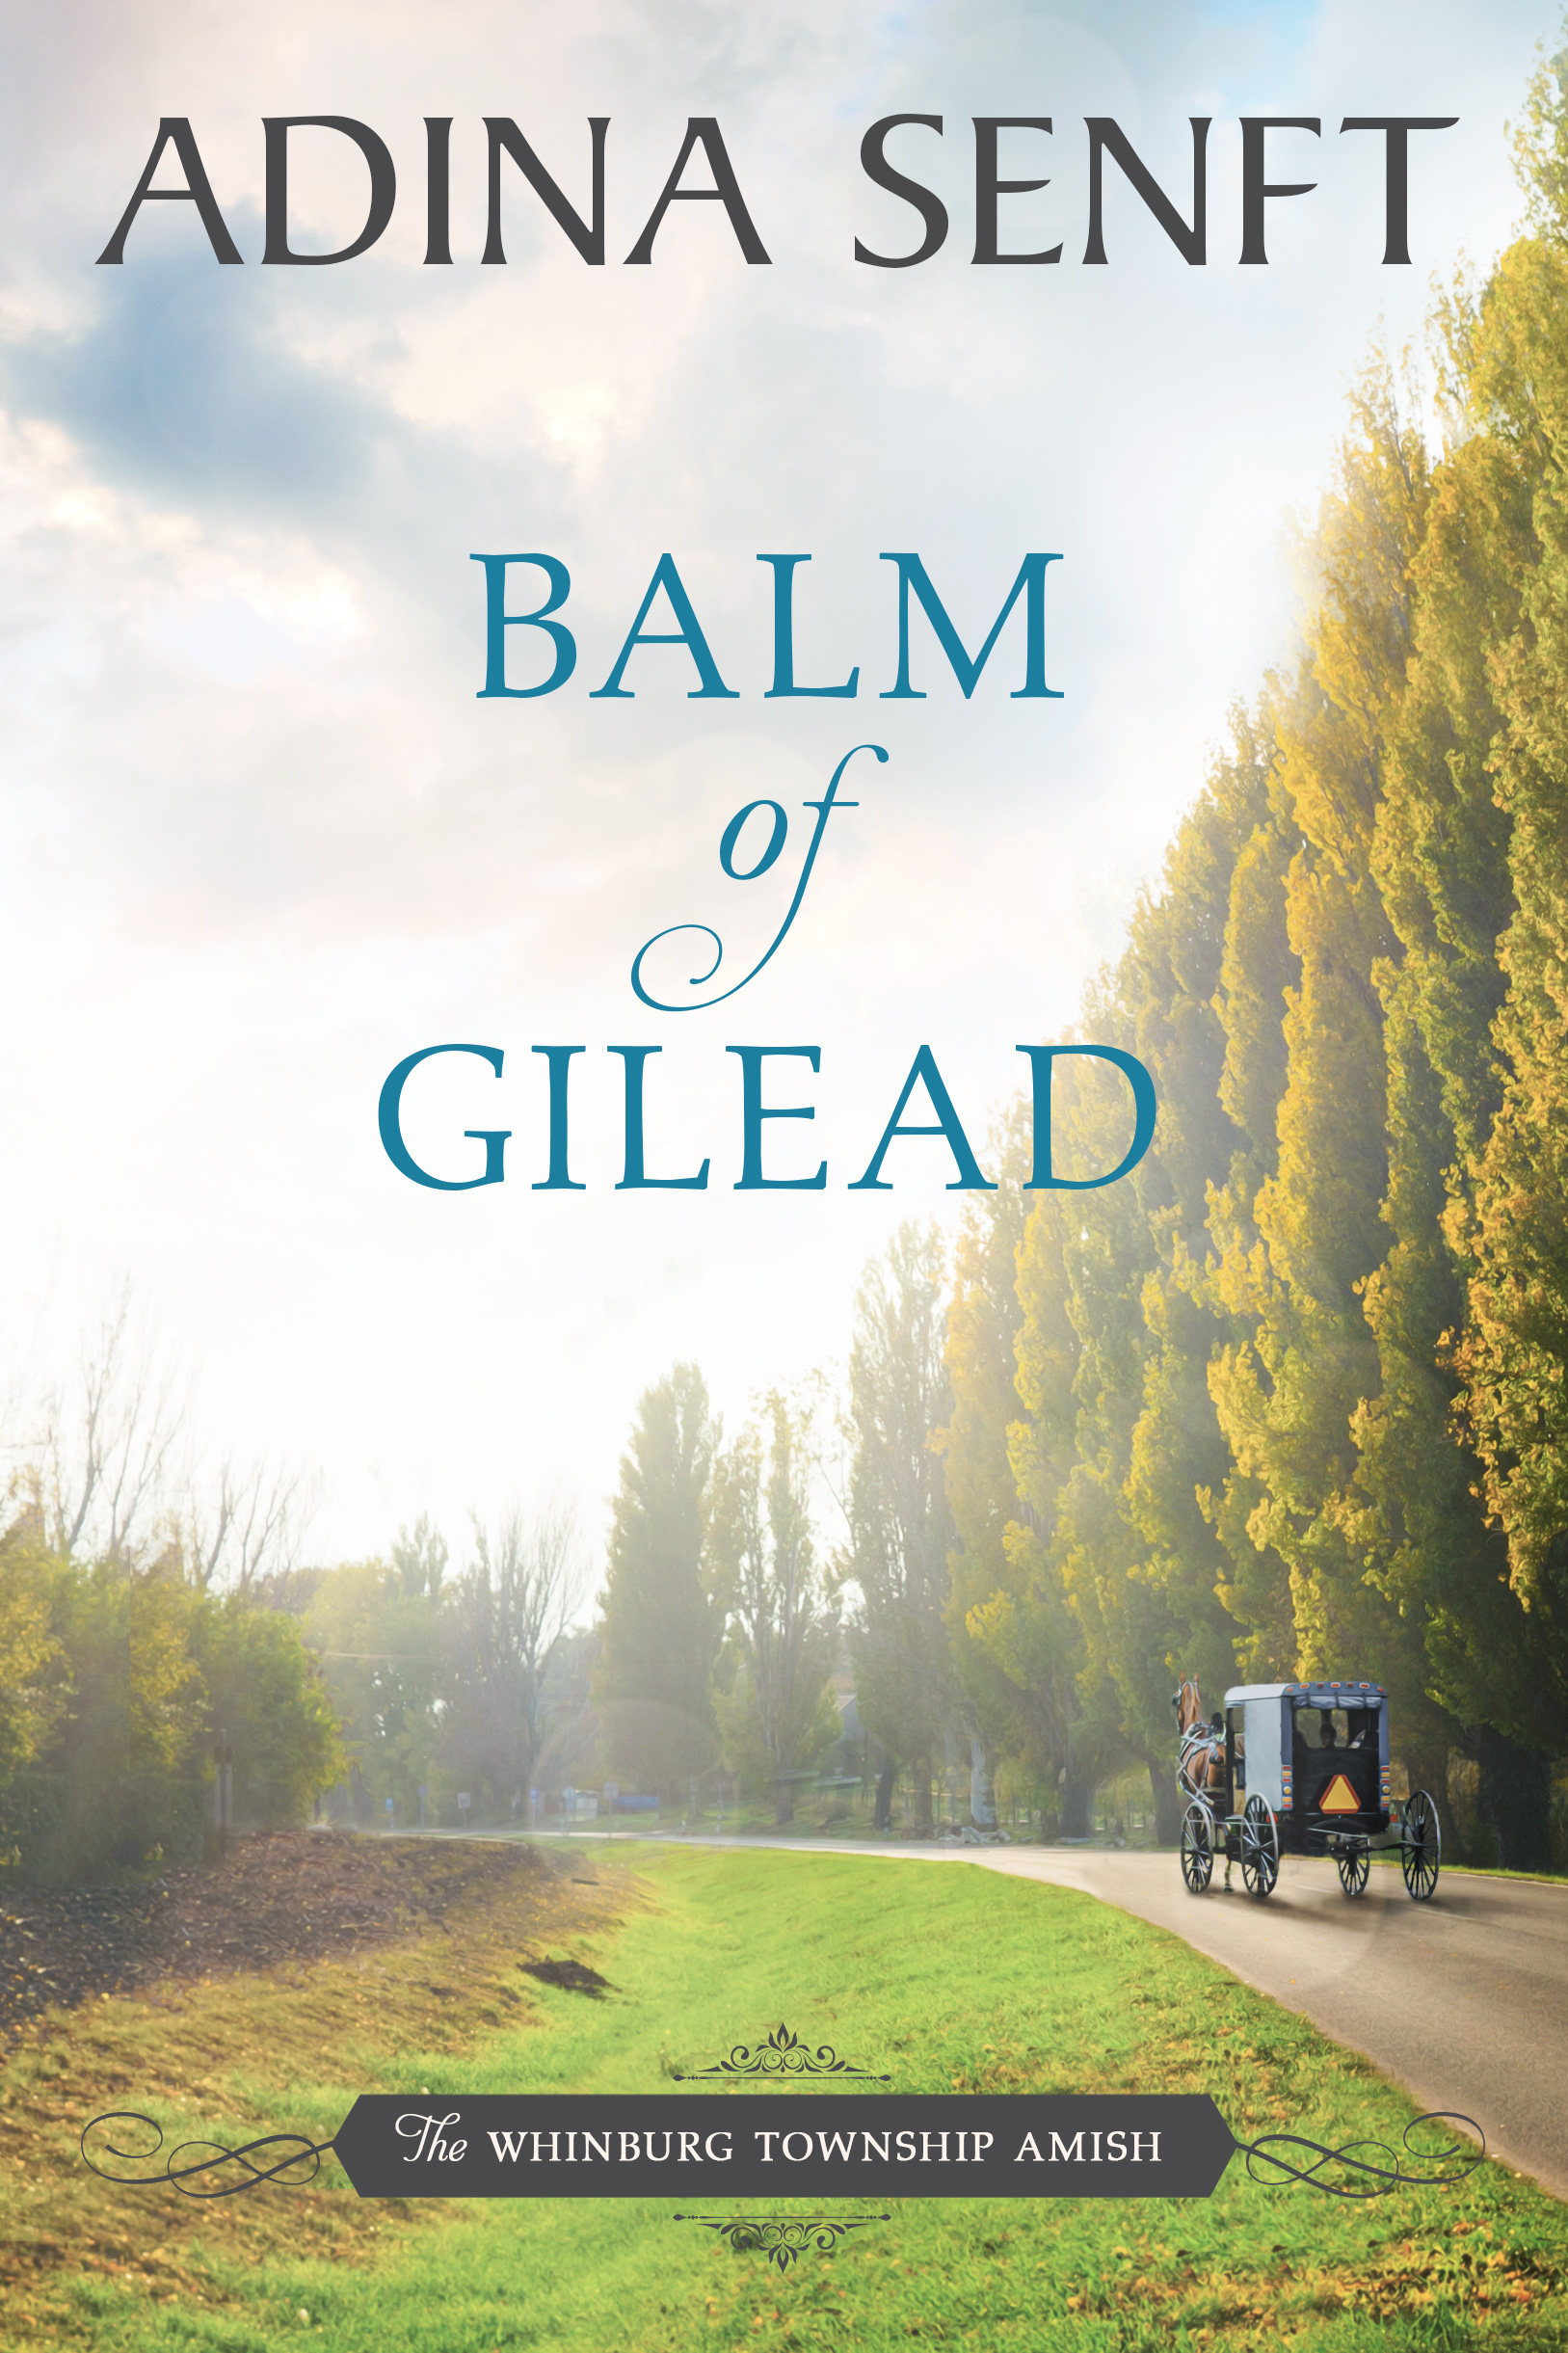 Balm of Gilead by Adina Senft